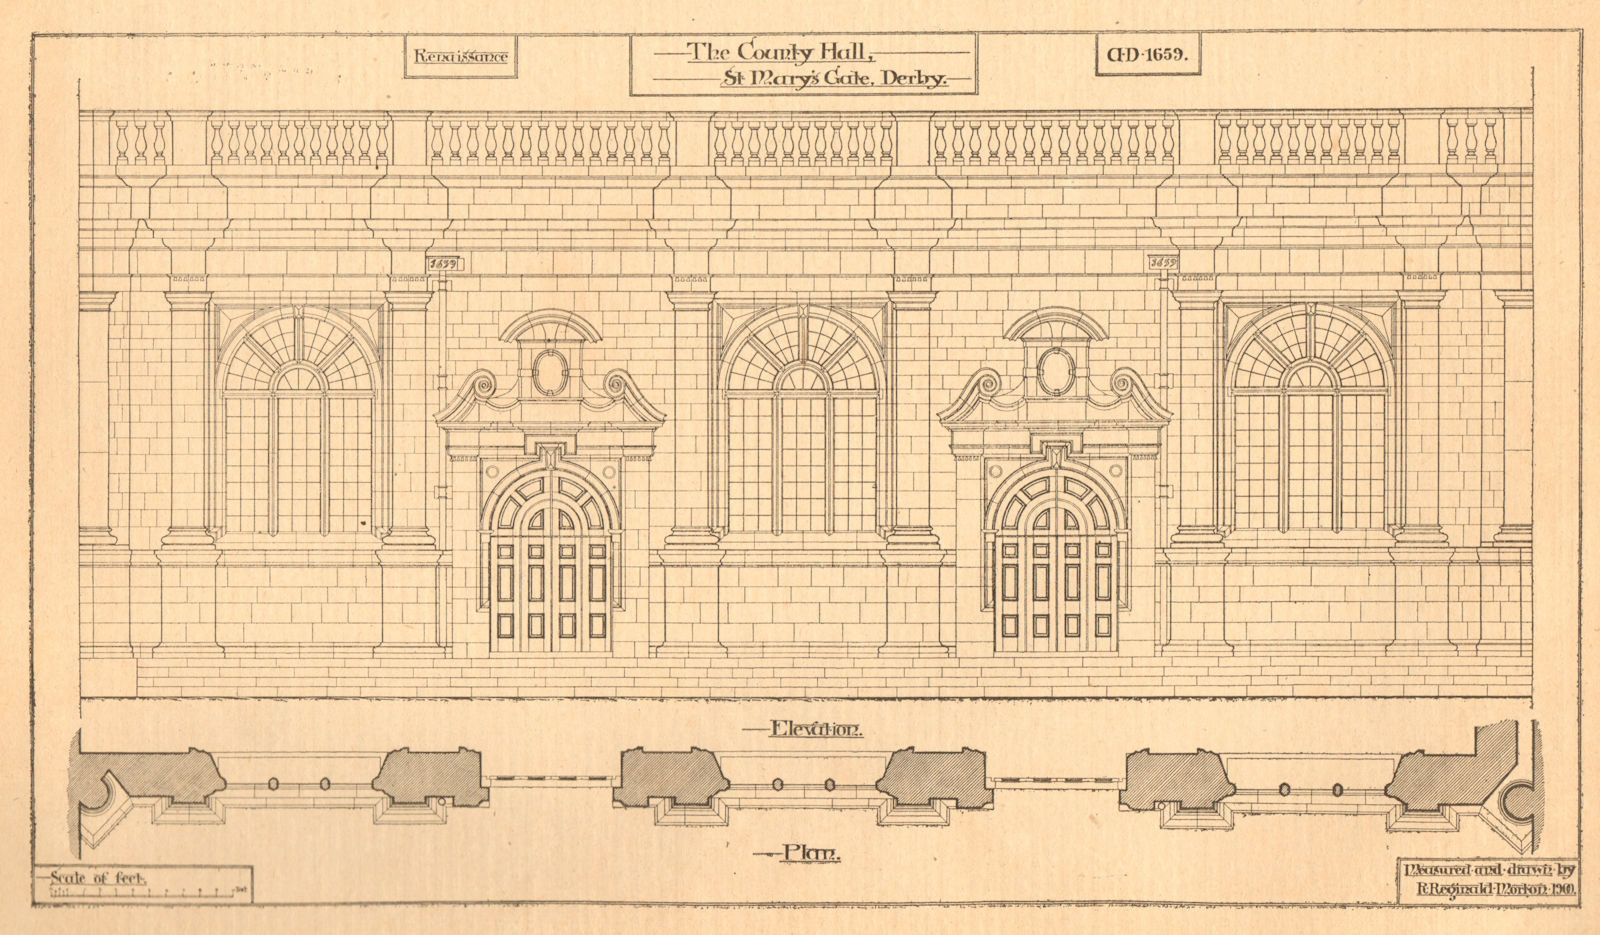 Associate Product County Hall, St. Marys Gate, Derby, by R. Reginald Morton. Elevation & plan 1901